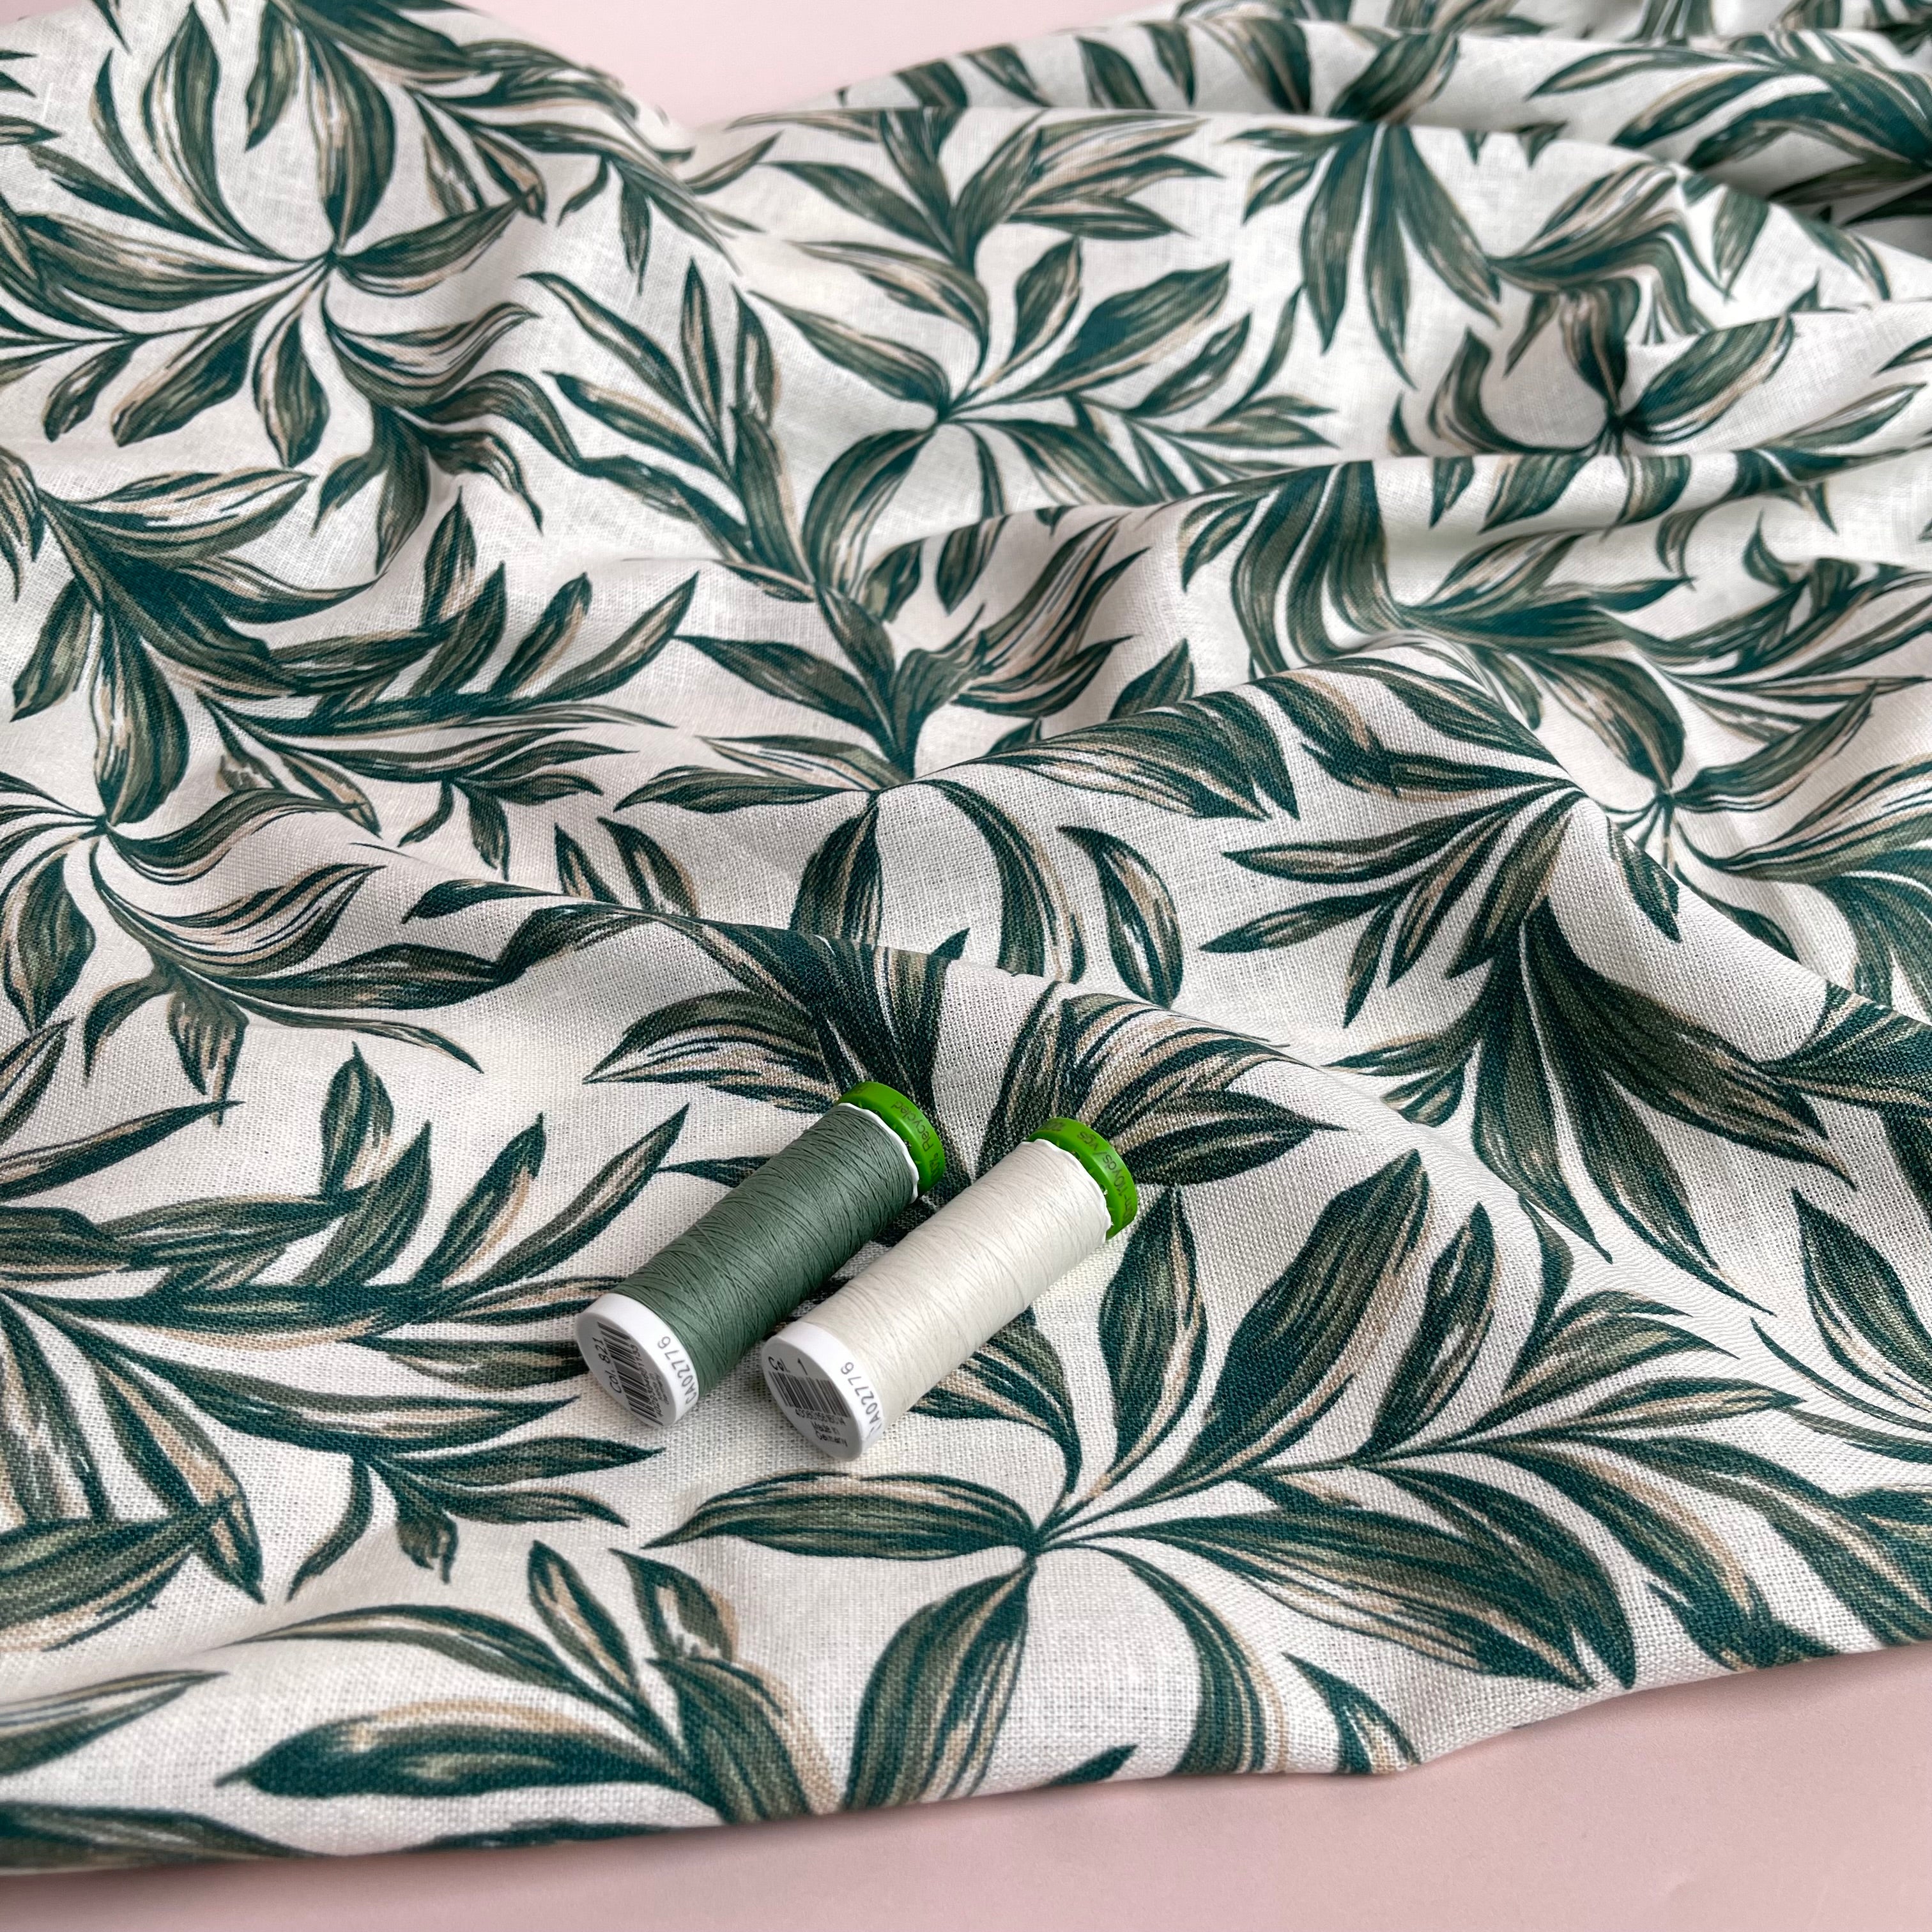 Leaves on Ecru Washed Linen Viscose Blend Fabric